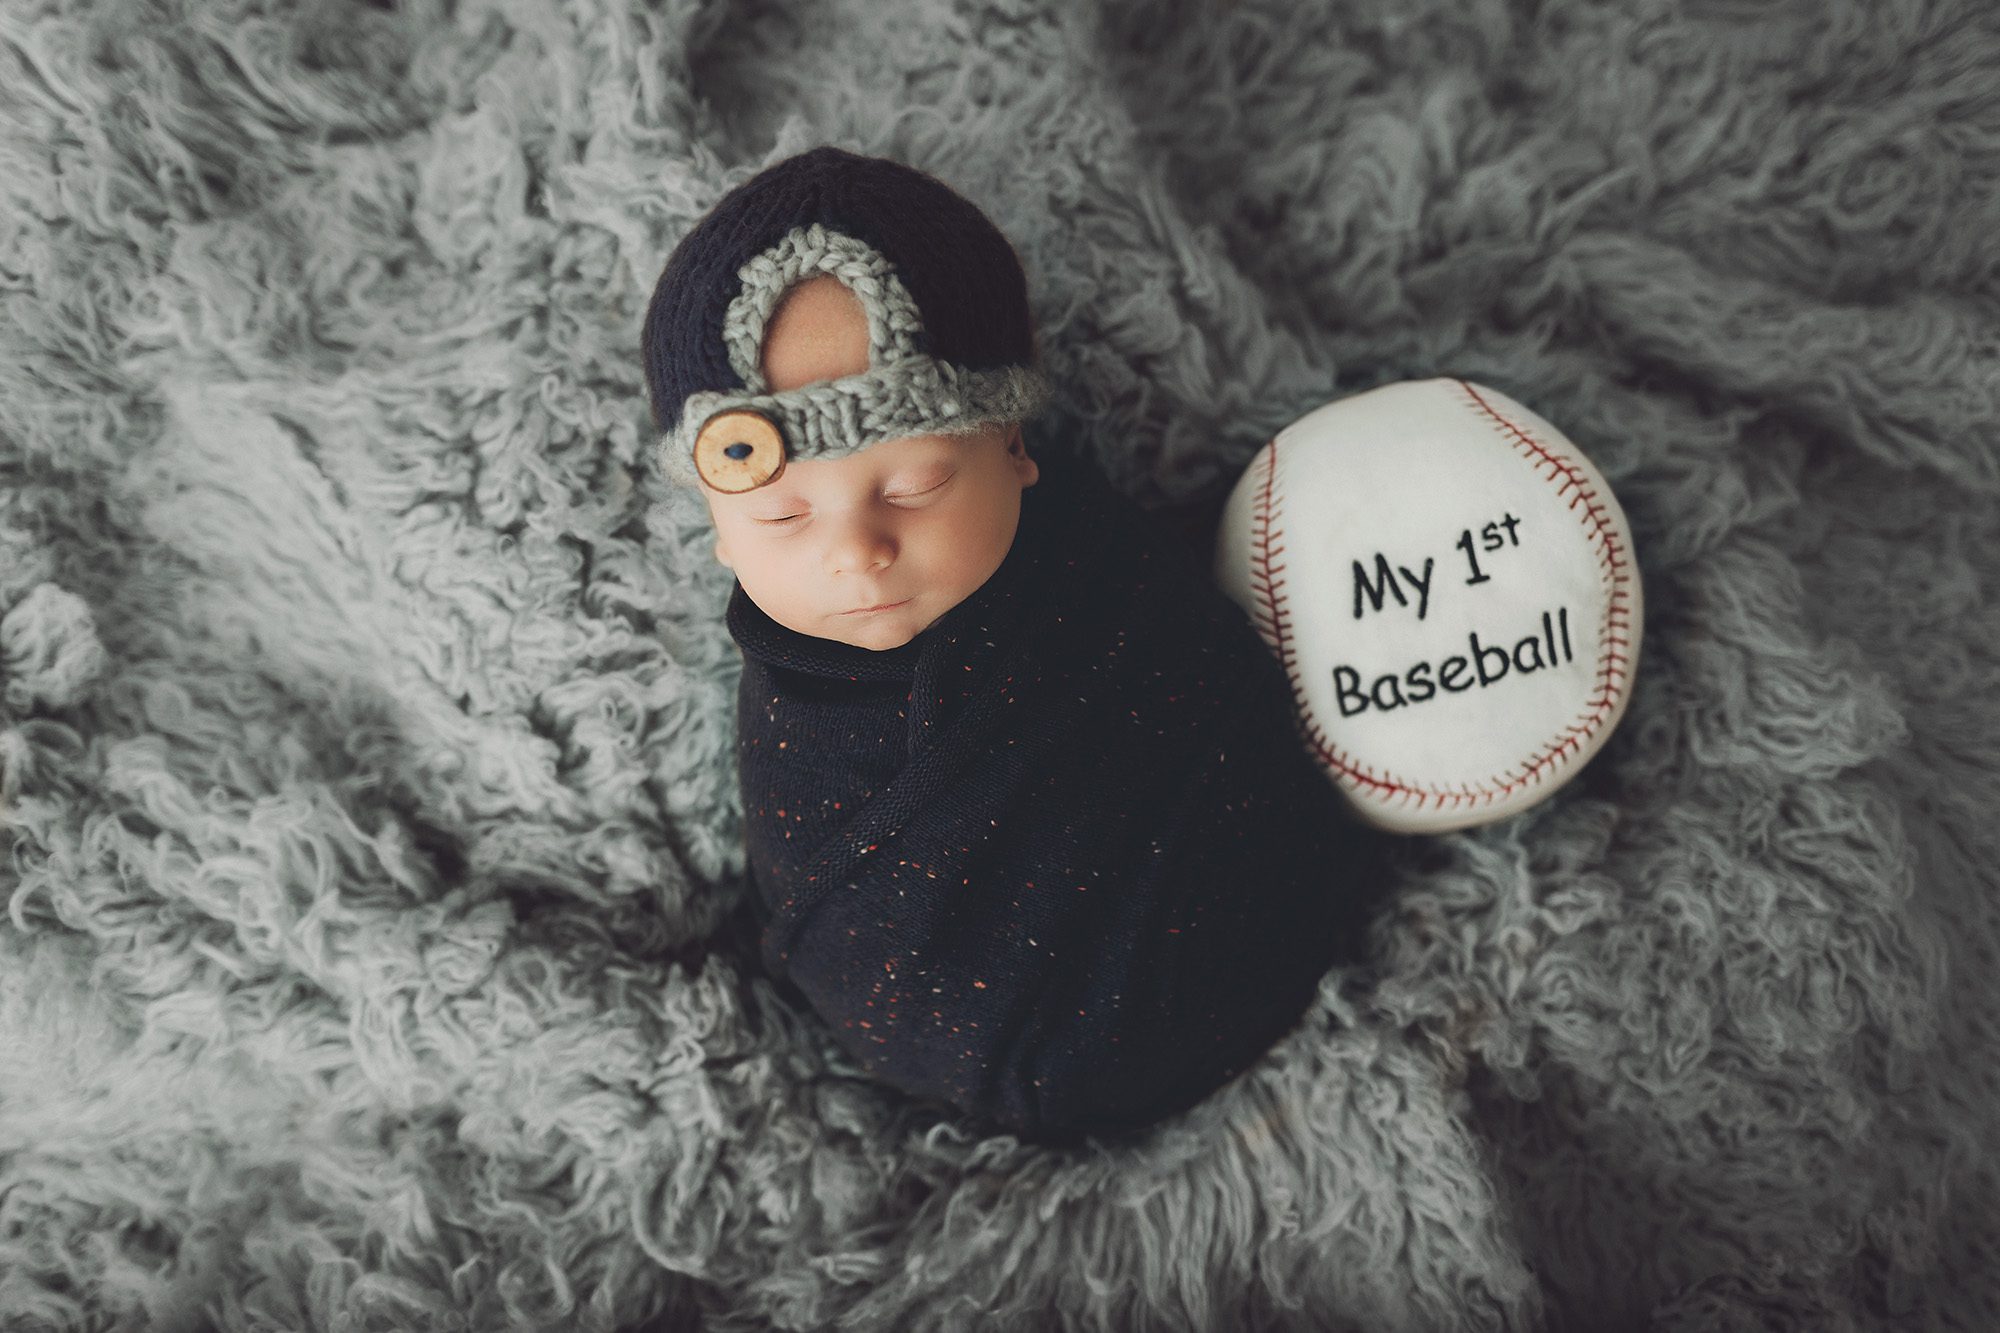 Tyler's first baseball